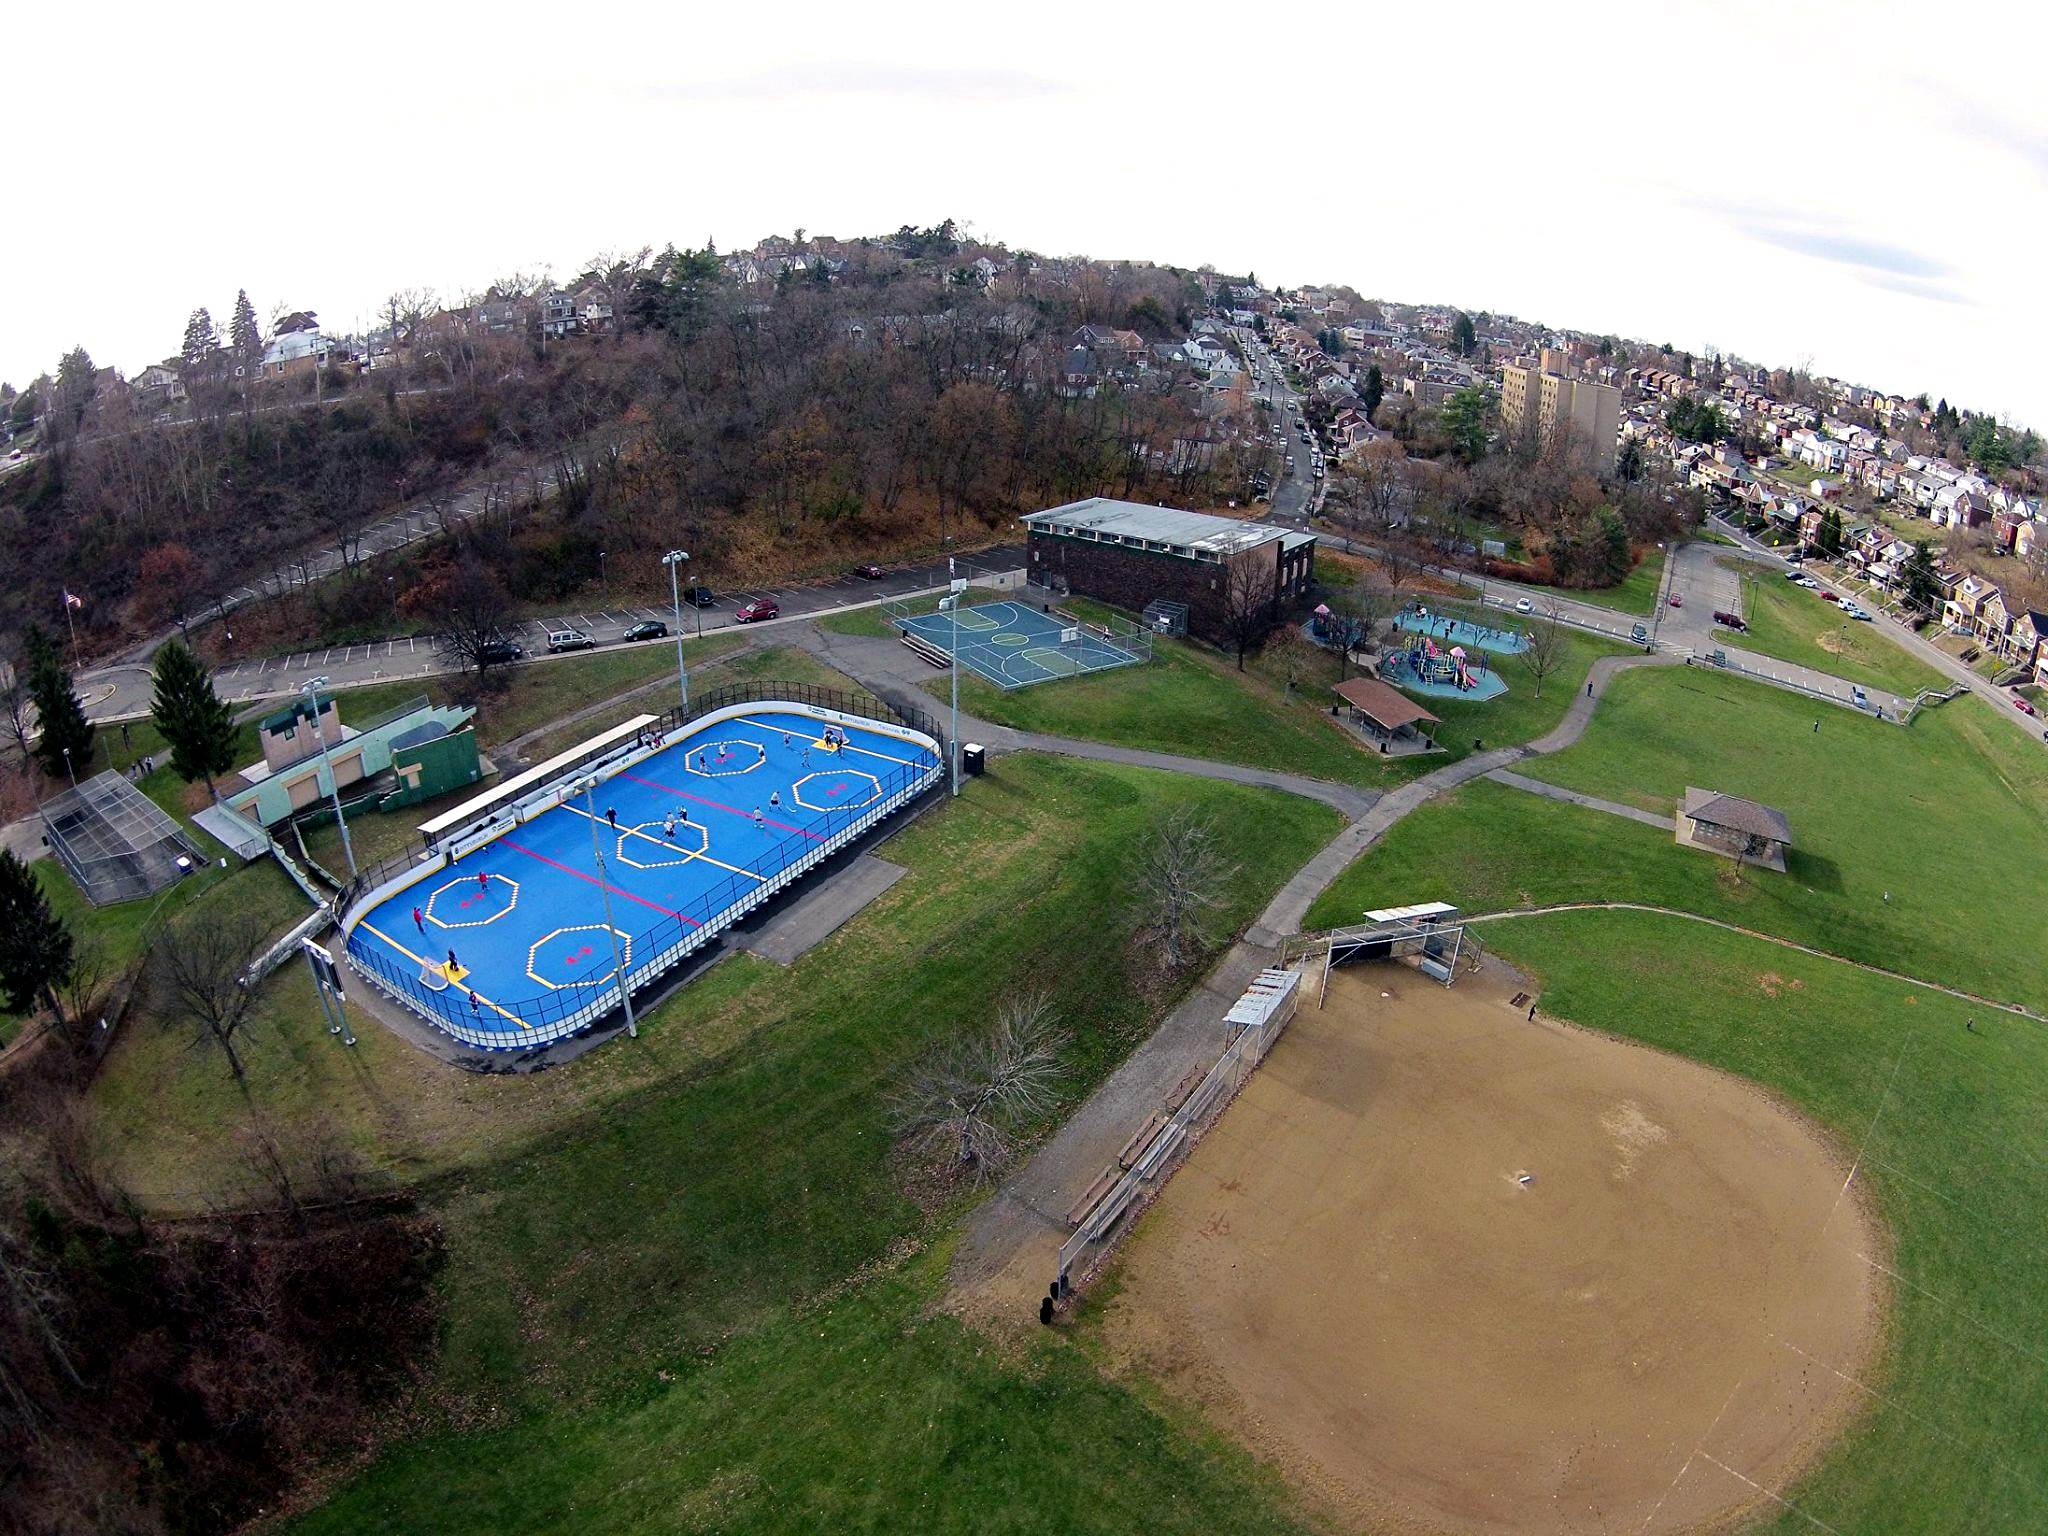 Brookline Park Aerial View - November 23, 2014